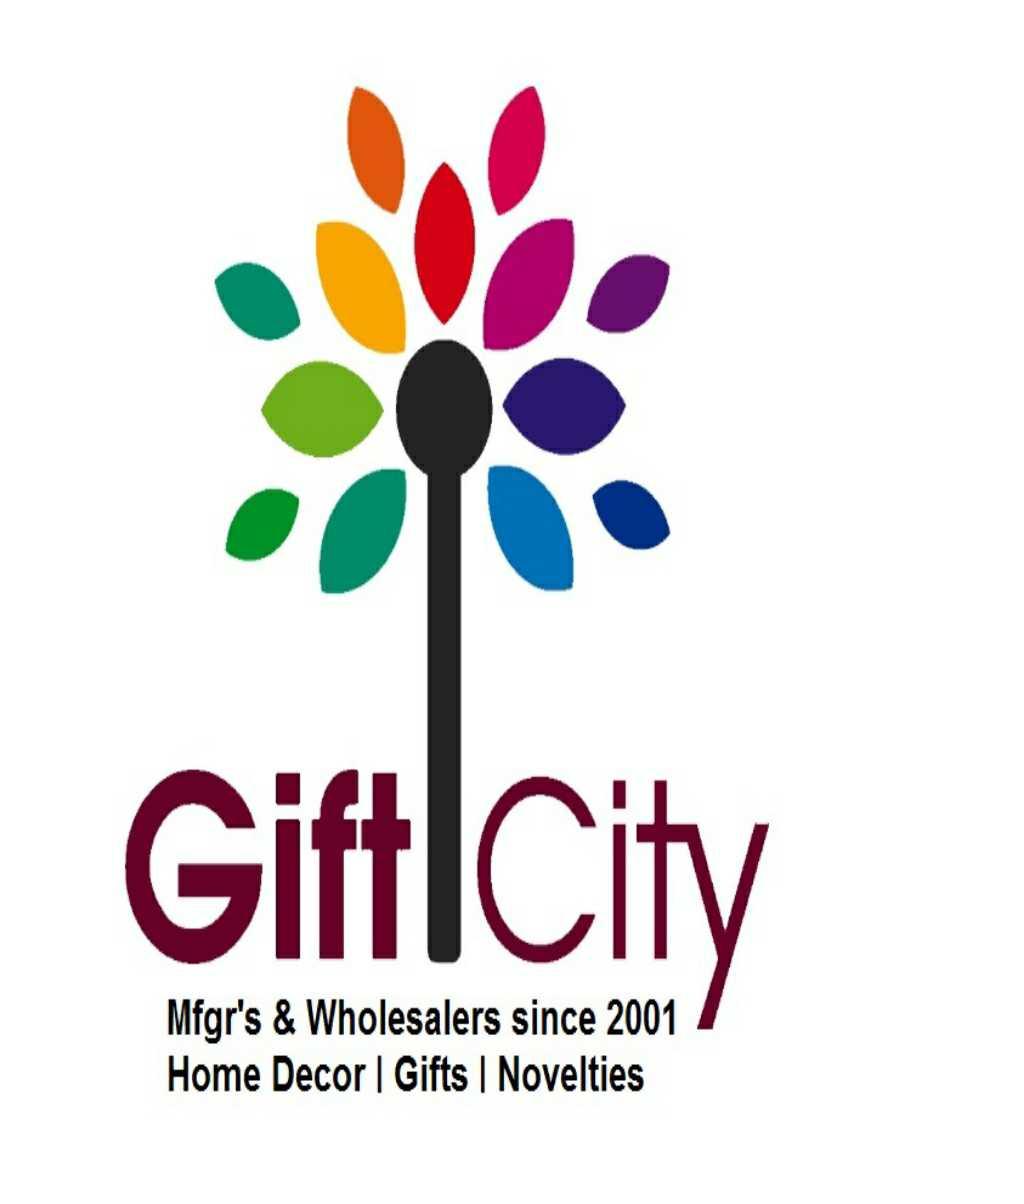 Gift City